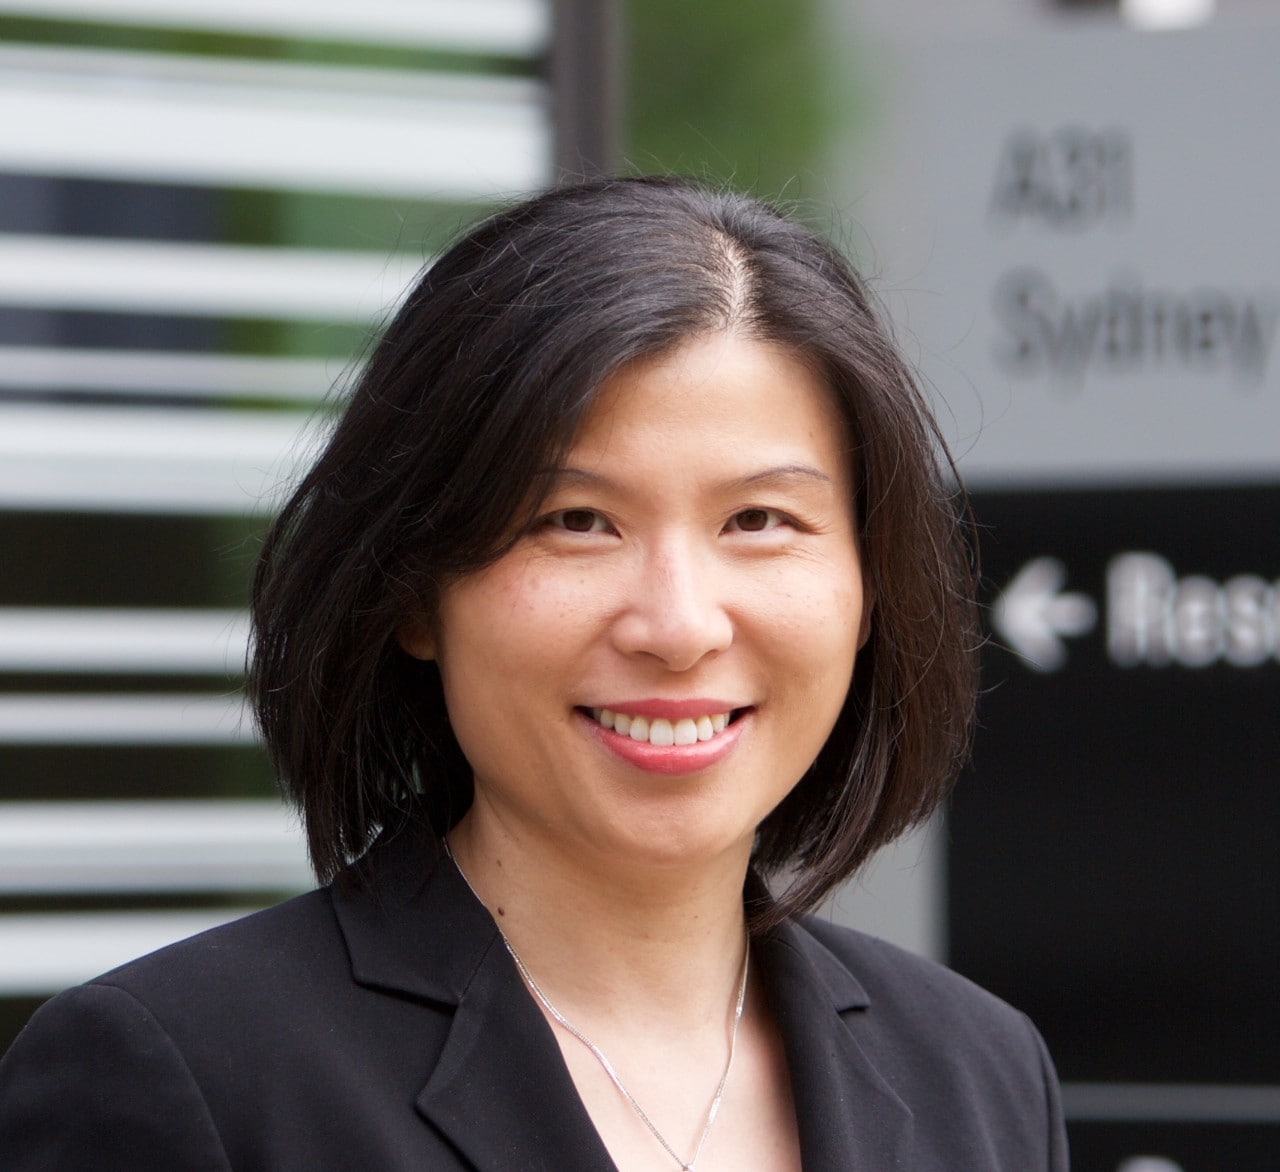 Professor Anita Ho-Baillie